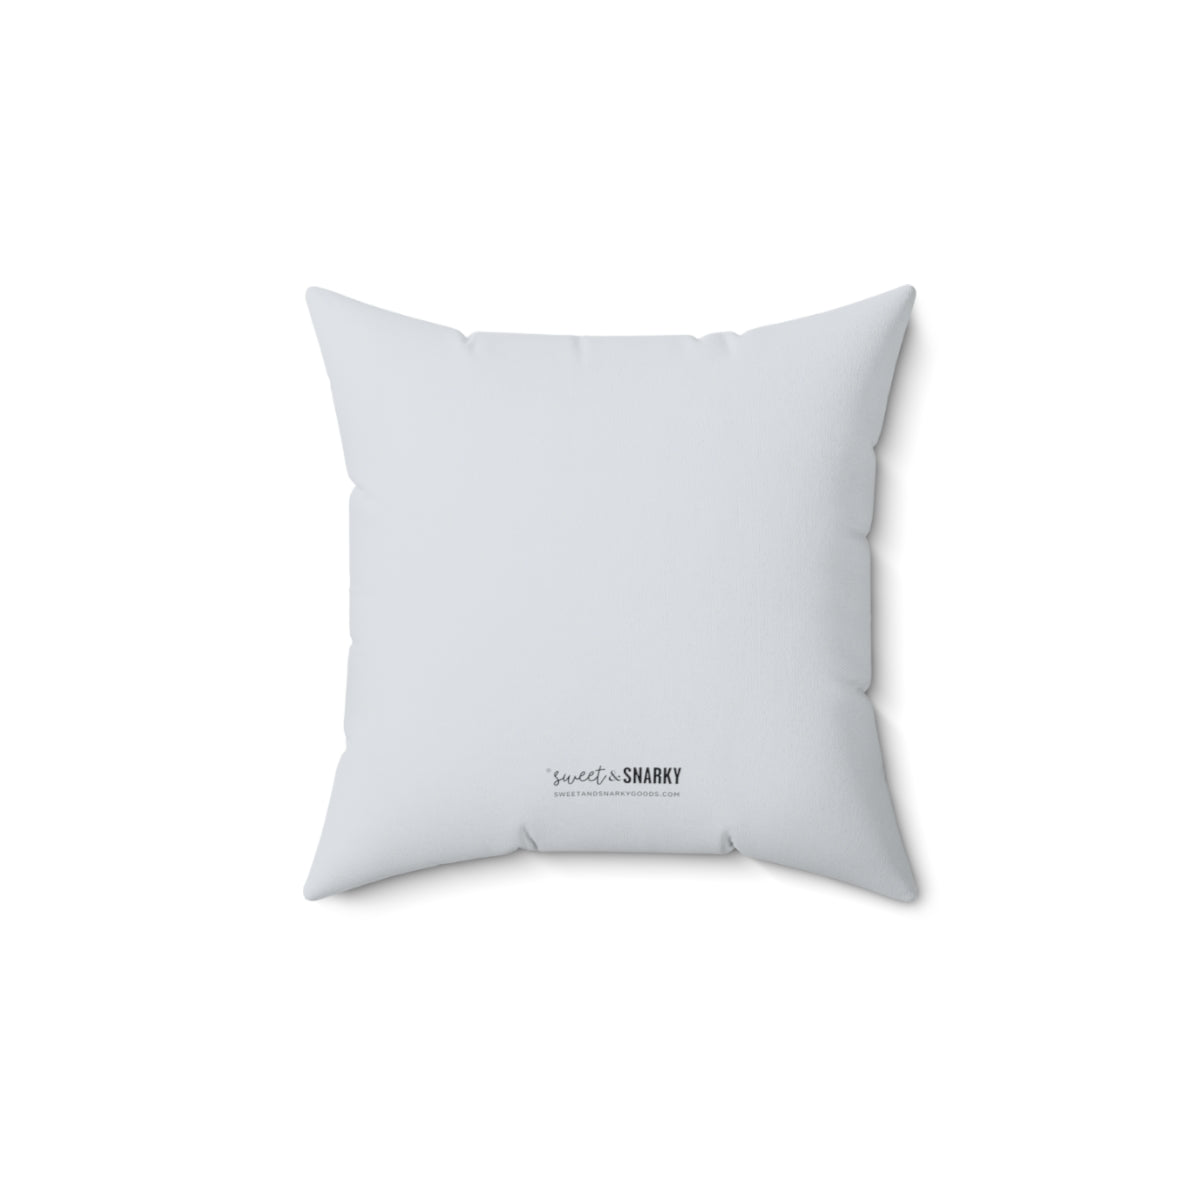 Pillow Fight | Snarky Throw Pillow | 4 sizes